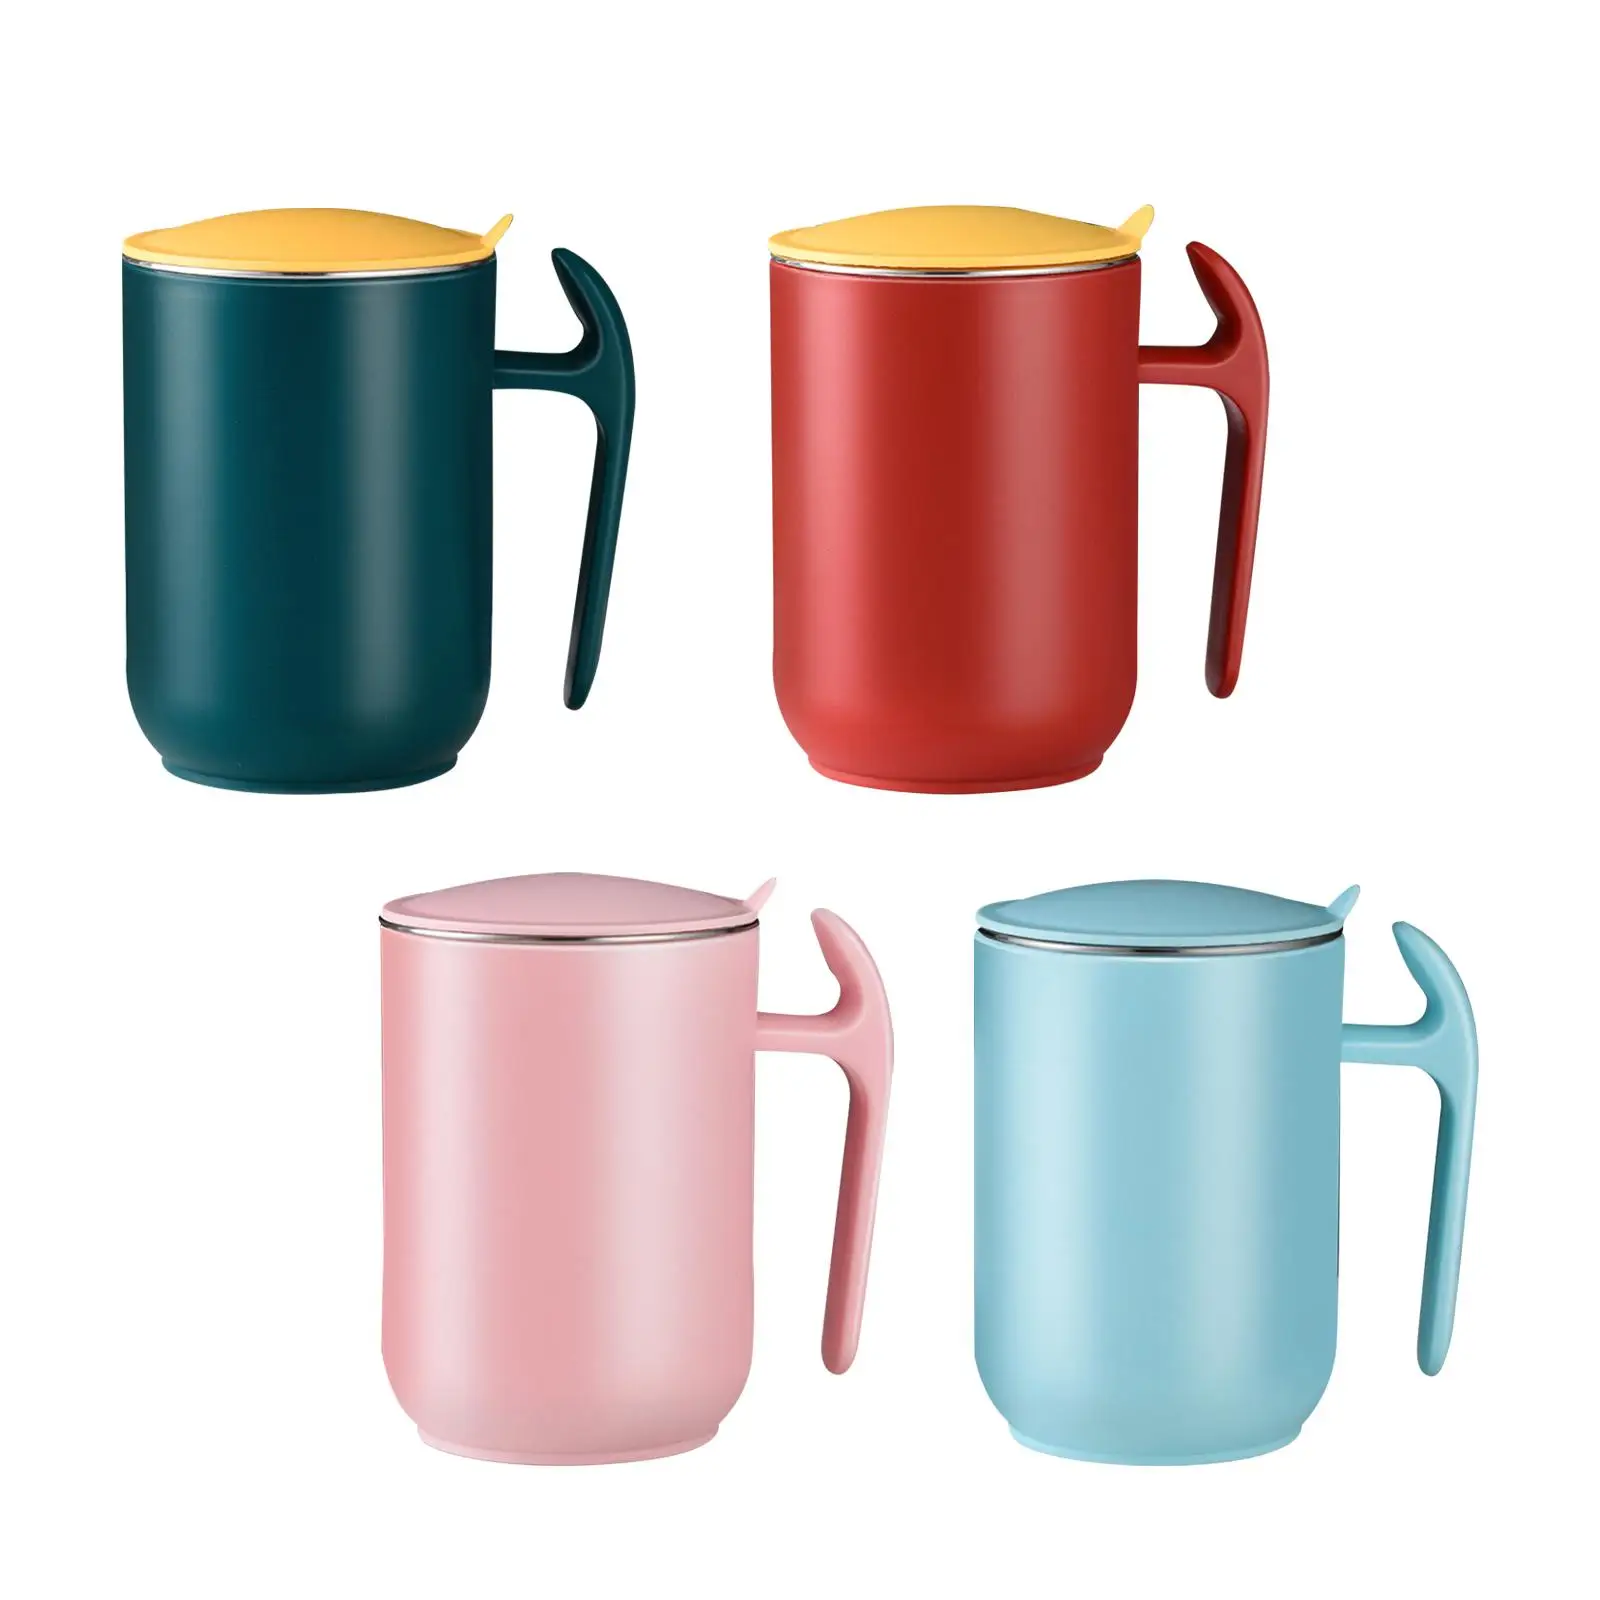 550ml Insulated Coffee Mug with Lid,Stainless Steel Coffee Cup,Vacuum Coffee Tumbler with Handle,Premium Thermal Coffee Mug